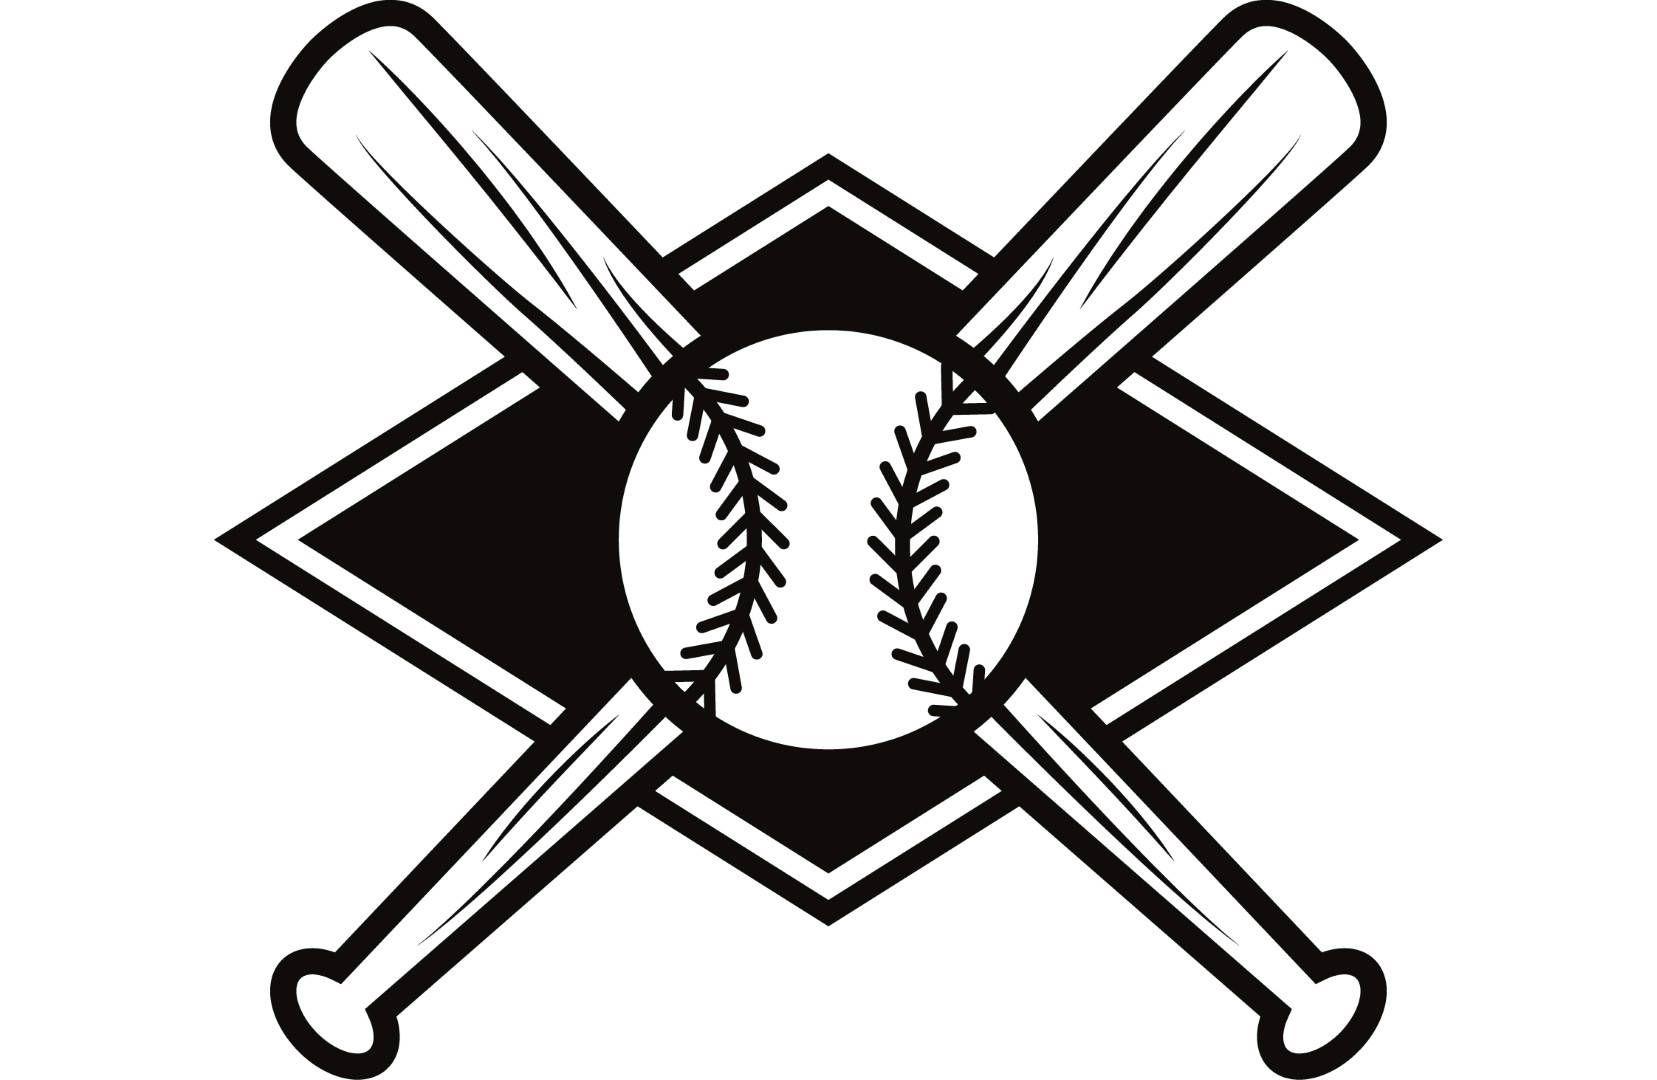 Bat and Ball Logo - Baseball Logo 7 Bats Crossed Ball Diamond League Equipment | Etsy